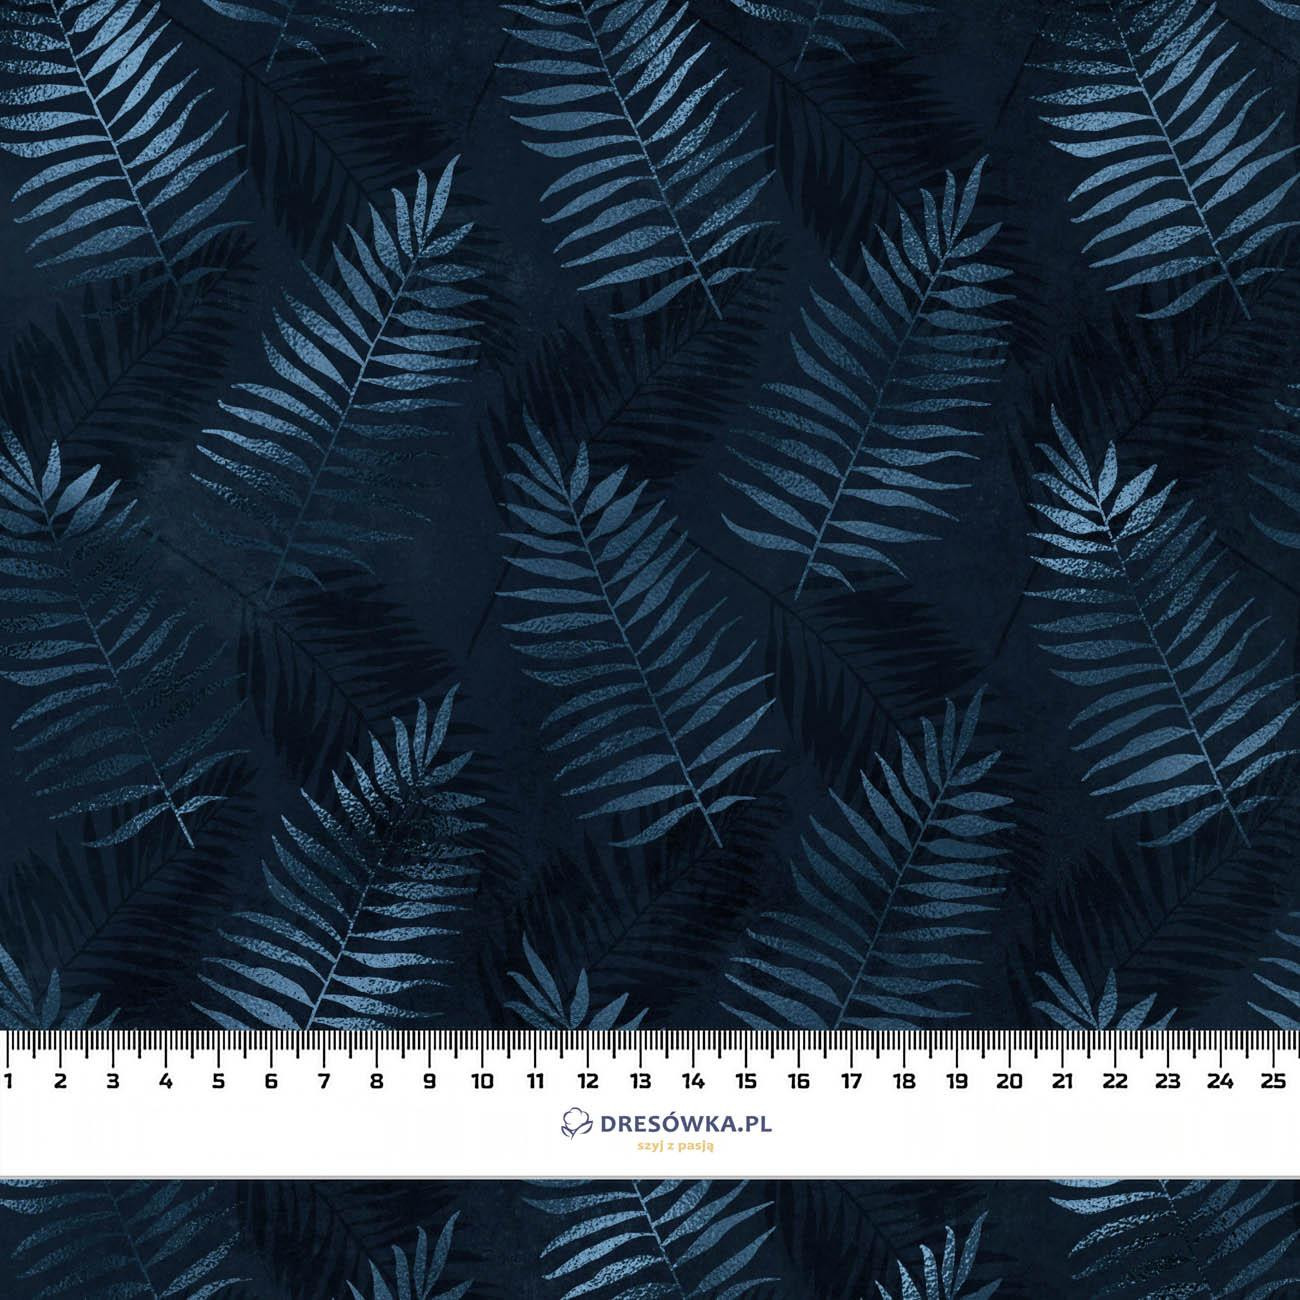 BLUE LEAVES pat .2 - Waterproof woven fabric